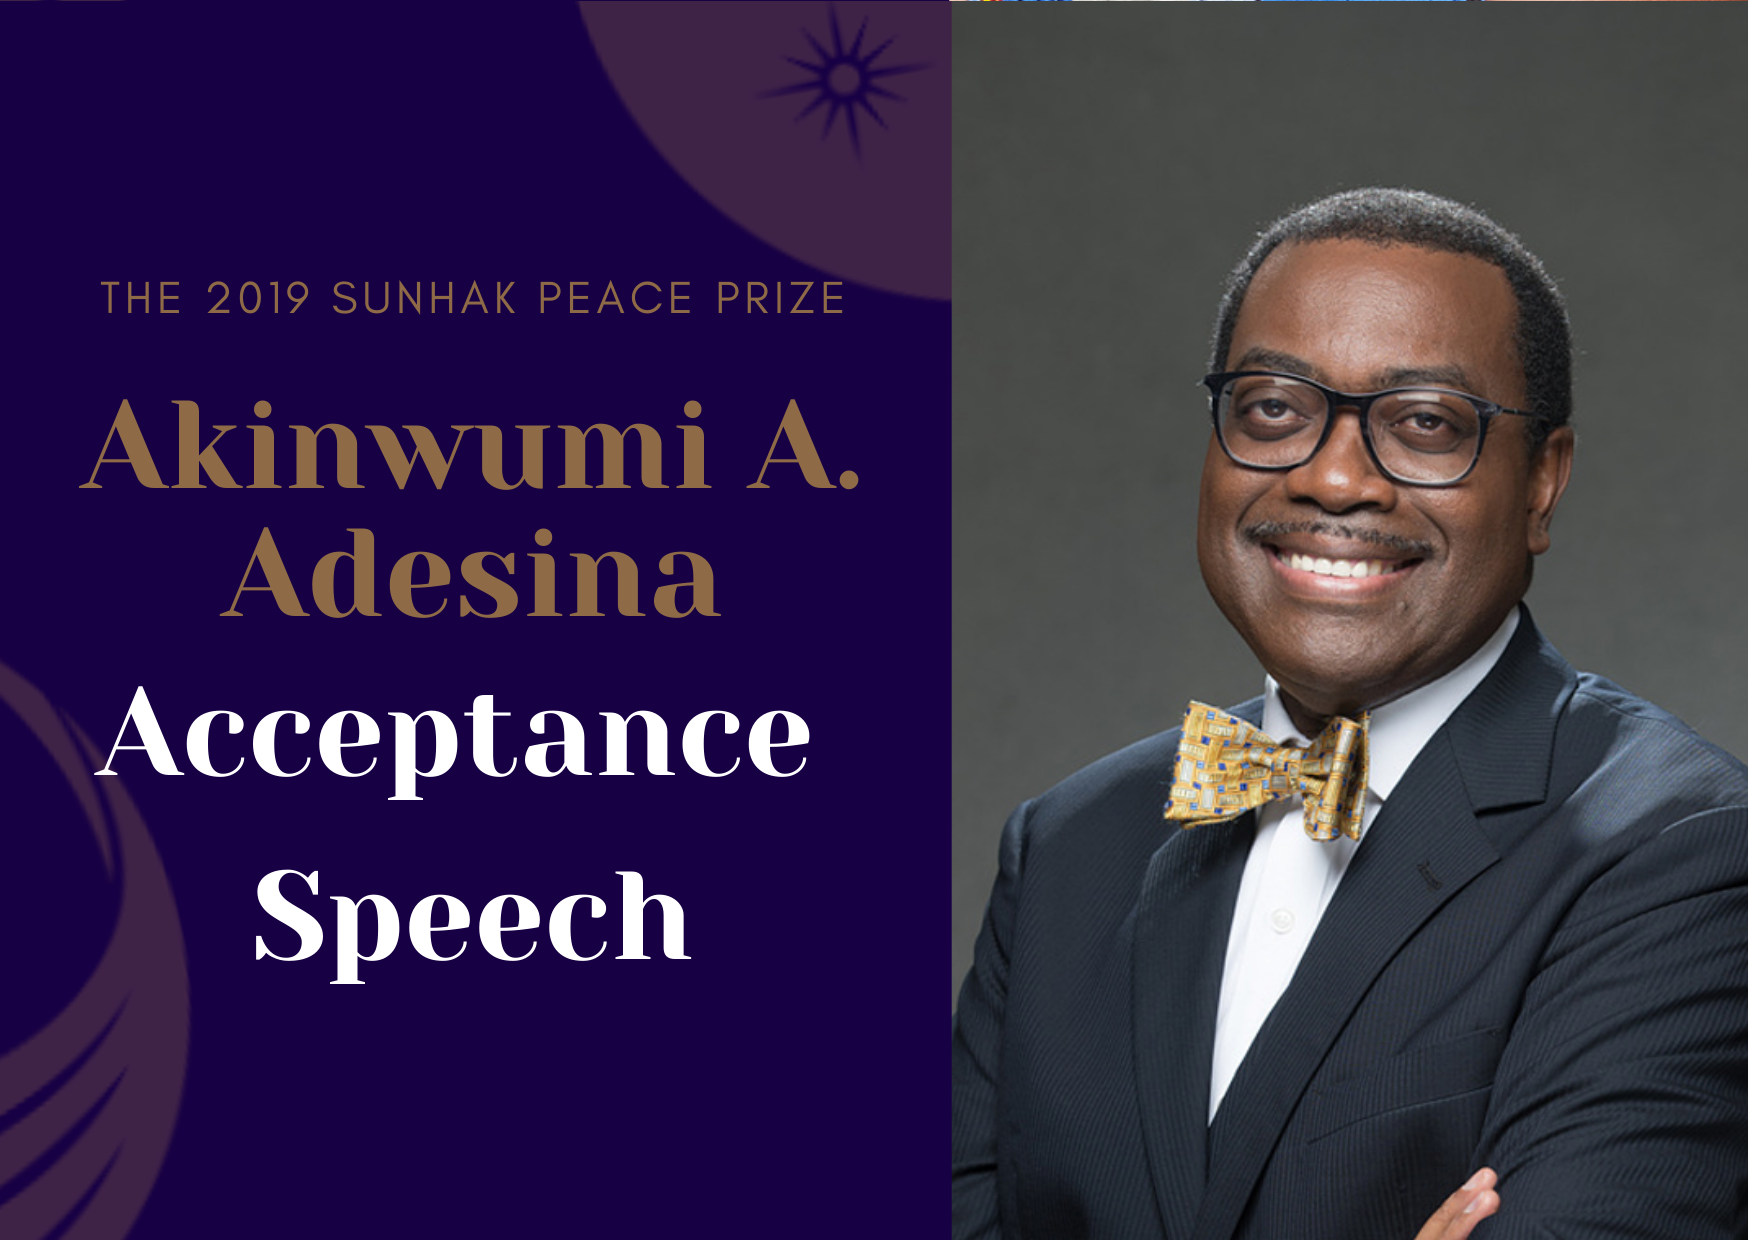 2019 Sunhak Peace Prize Laureate's Acceptance Speech - Dr. Akinwumi Adesina 썸네일